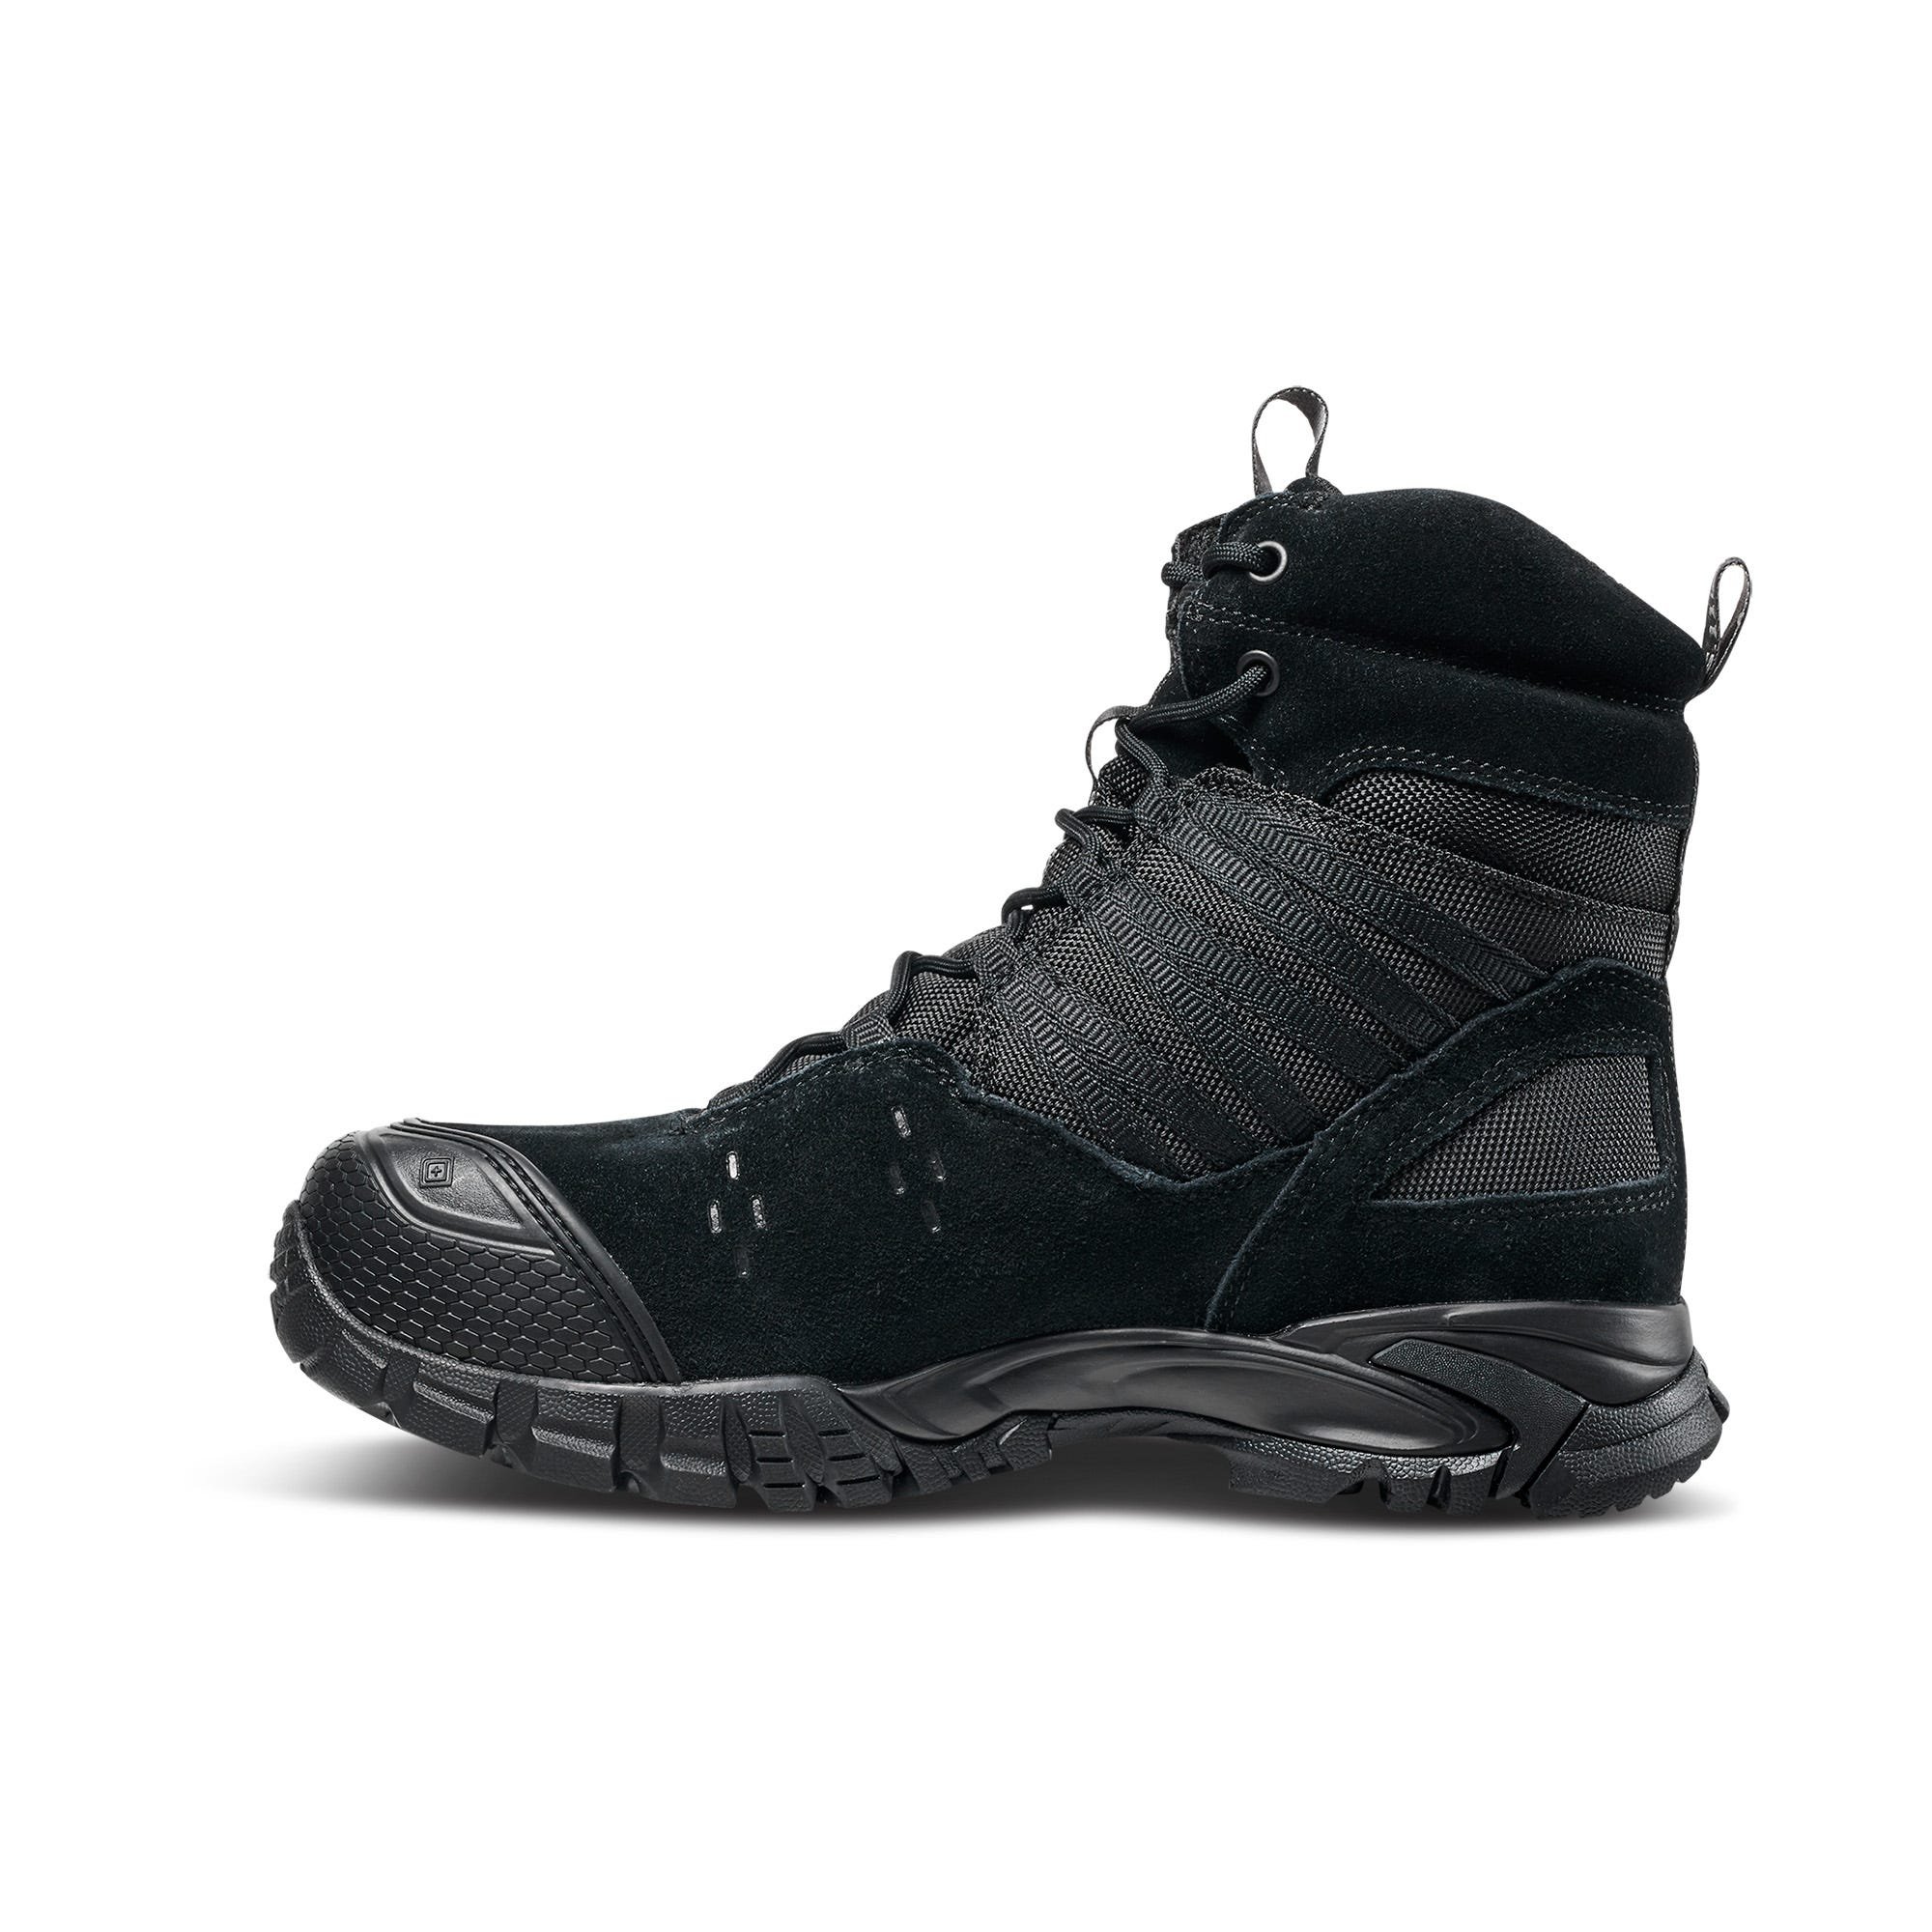 5.11 Work Gear Men's Union Waterproof 6-Inch Work Boots, Shock Absorbing Insole, Black, 7.5 Wide, Style 12390 - image 5 of 8